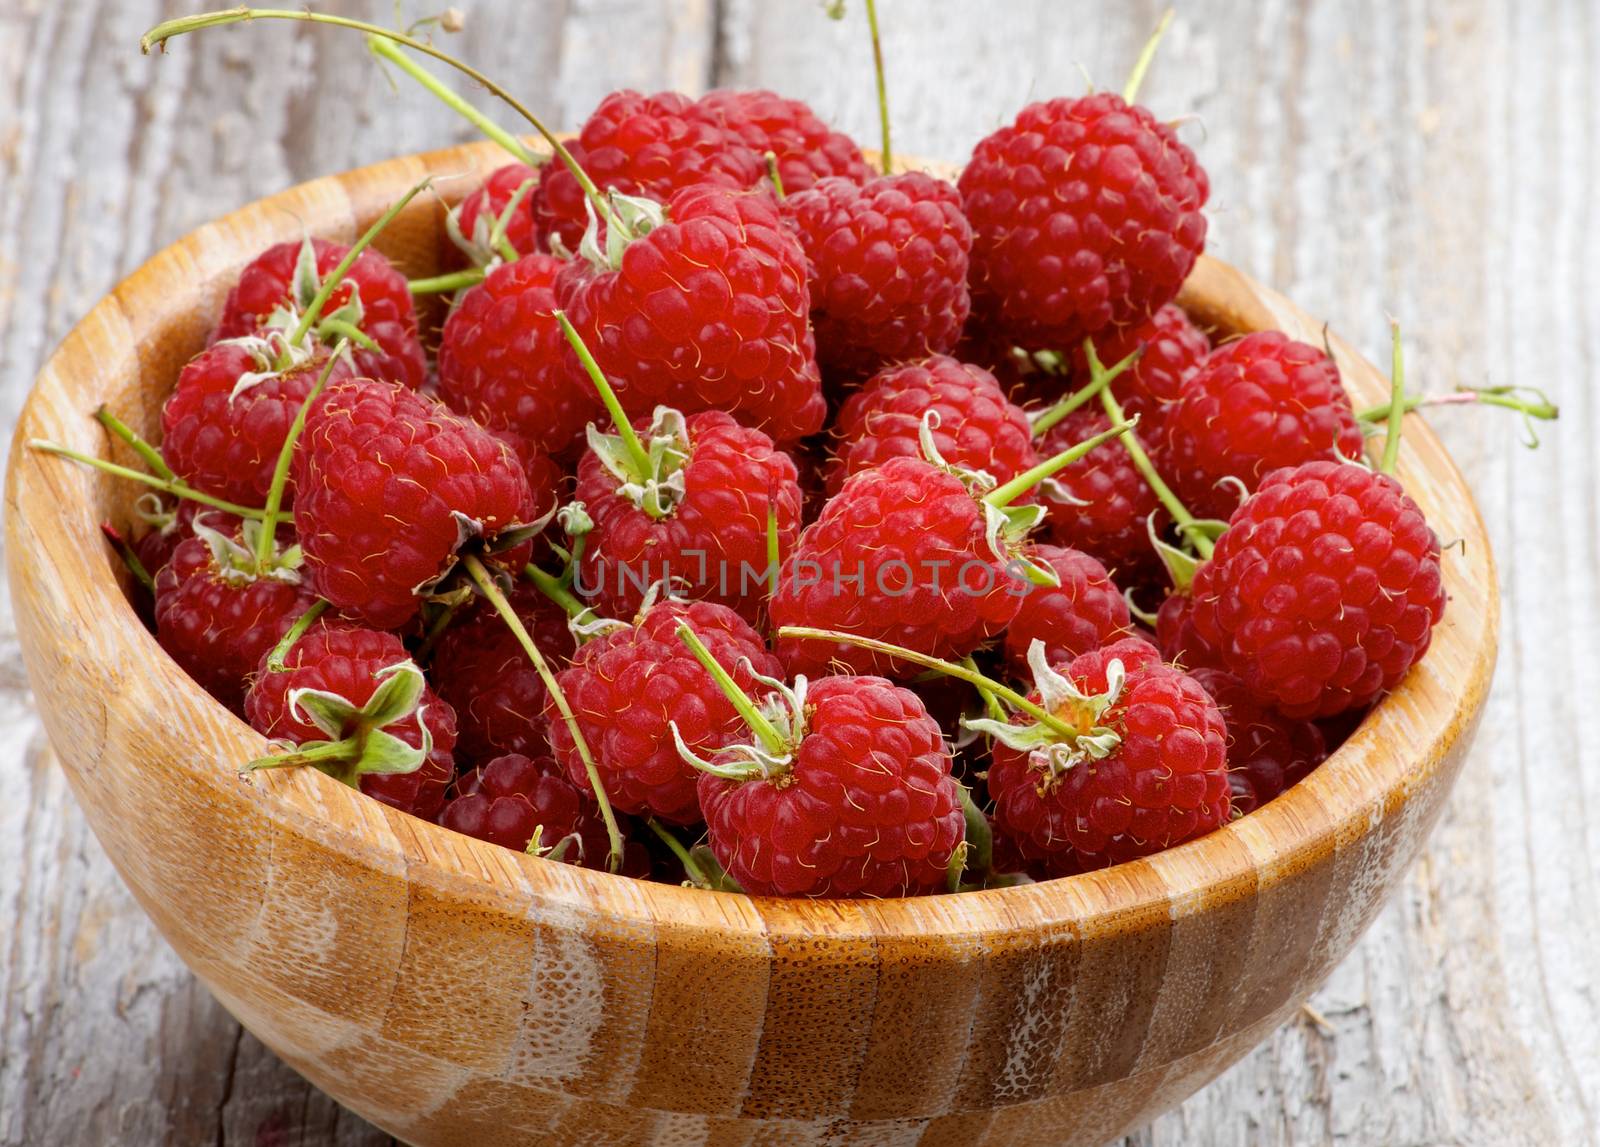 Raspberries by zhekos